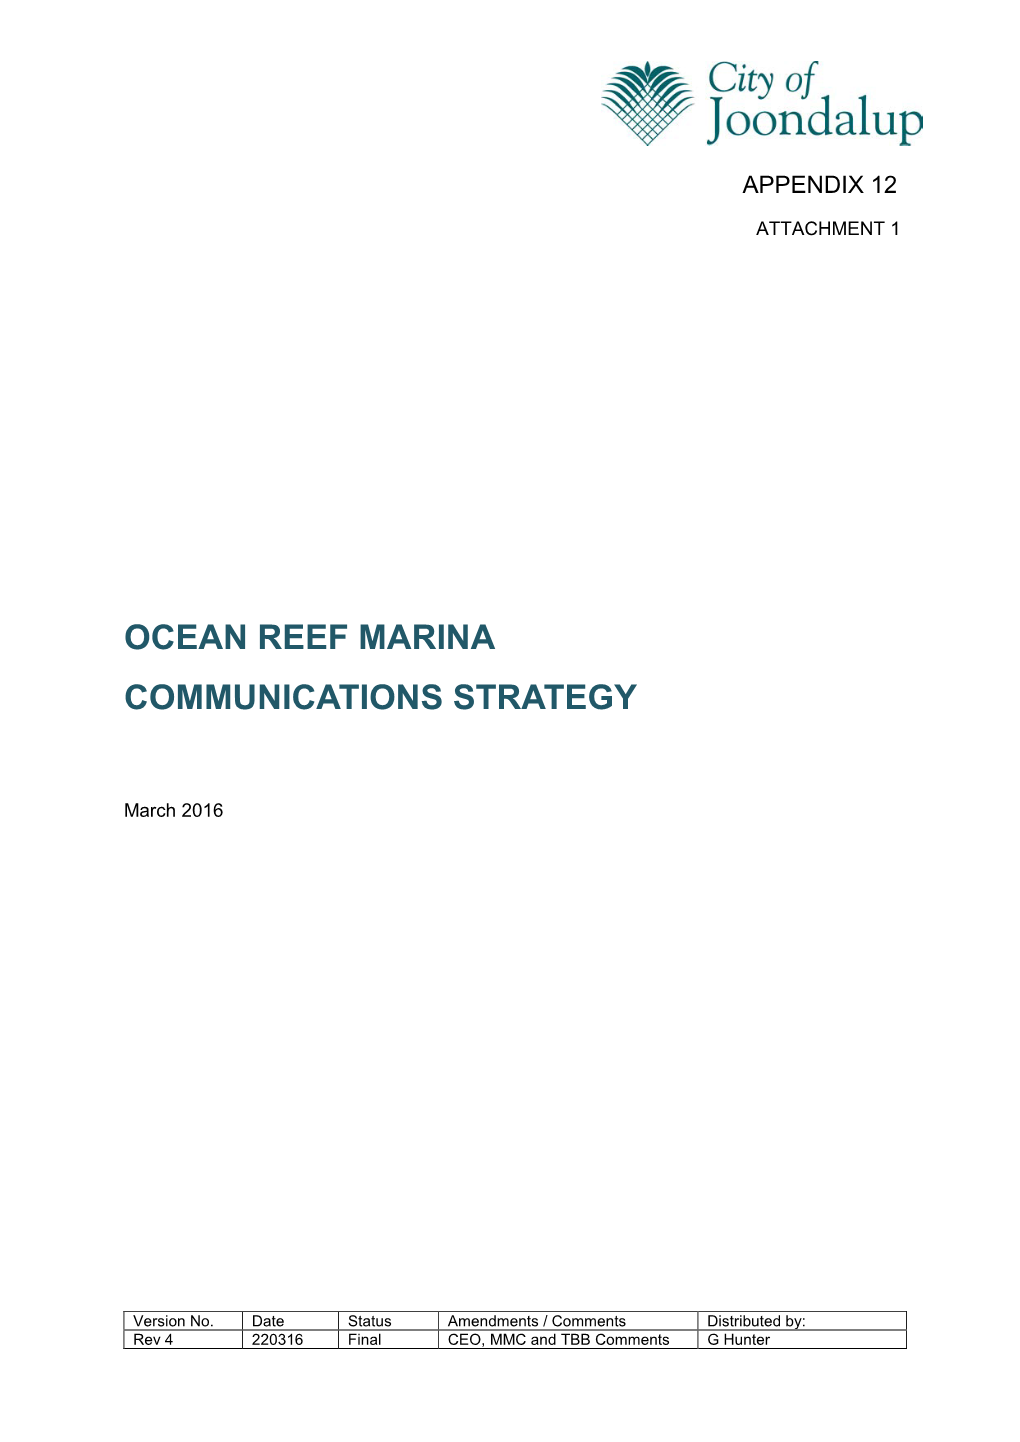 Ocean Reef Marina Communications Strategy